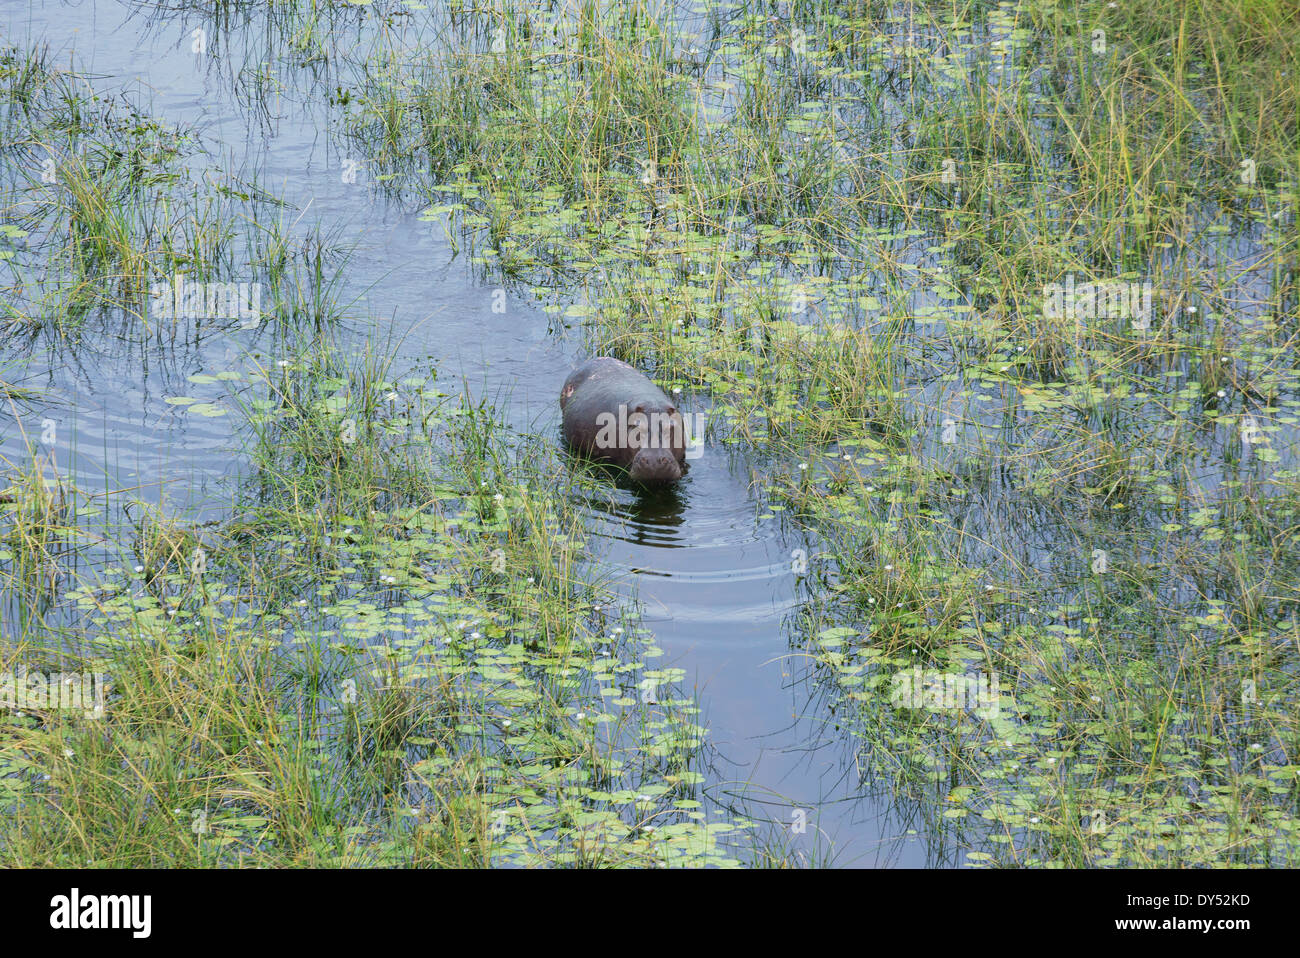 Flusspferd (Hippopotamus Amphibius) in einem Sumpf-Kanal Stockfoto